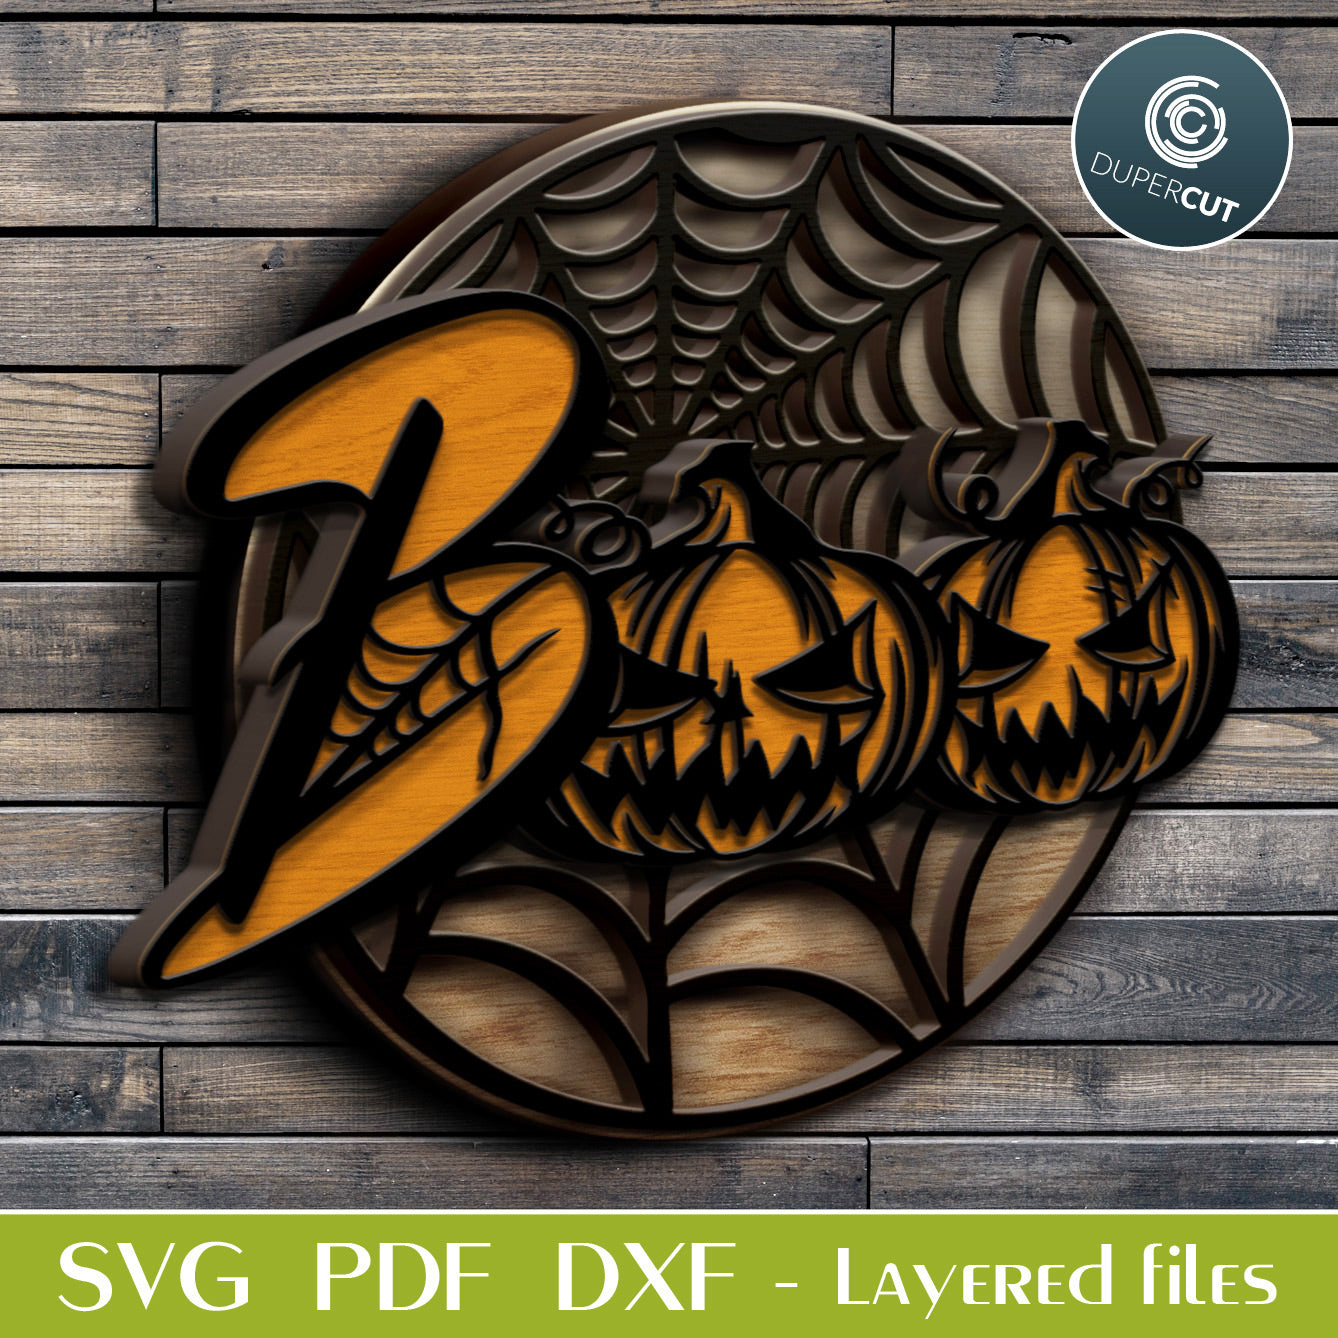 Halloween door hanger - SVG PDF DXF layered cutting files for Glowforge, Cricut, Silhouette, CNC plasma laser machines by DuperCut